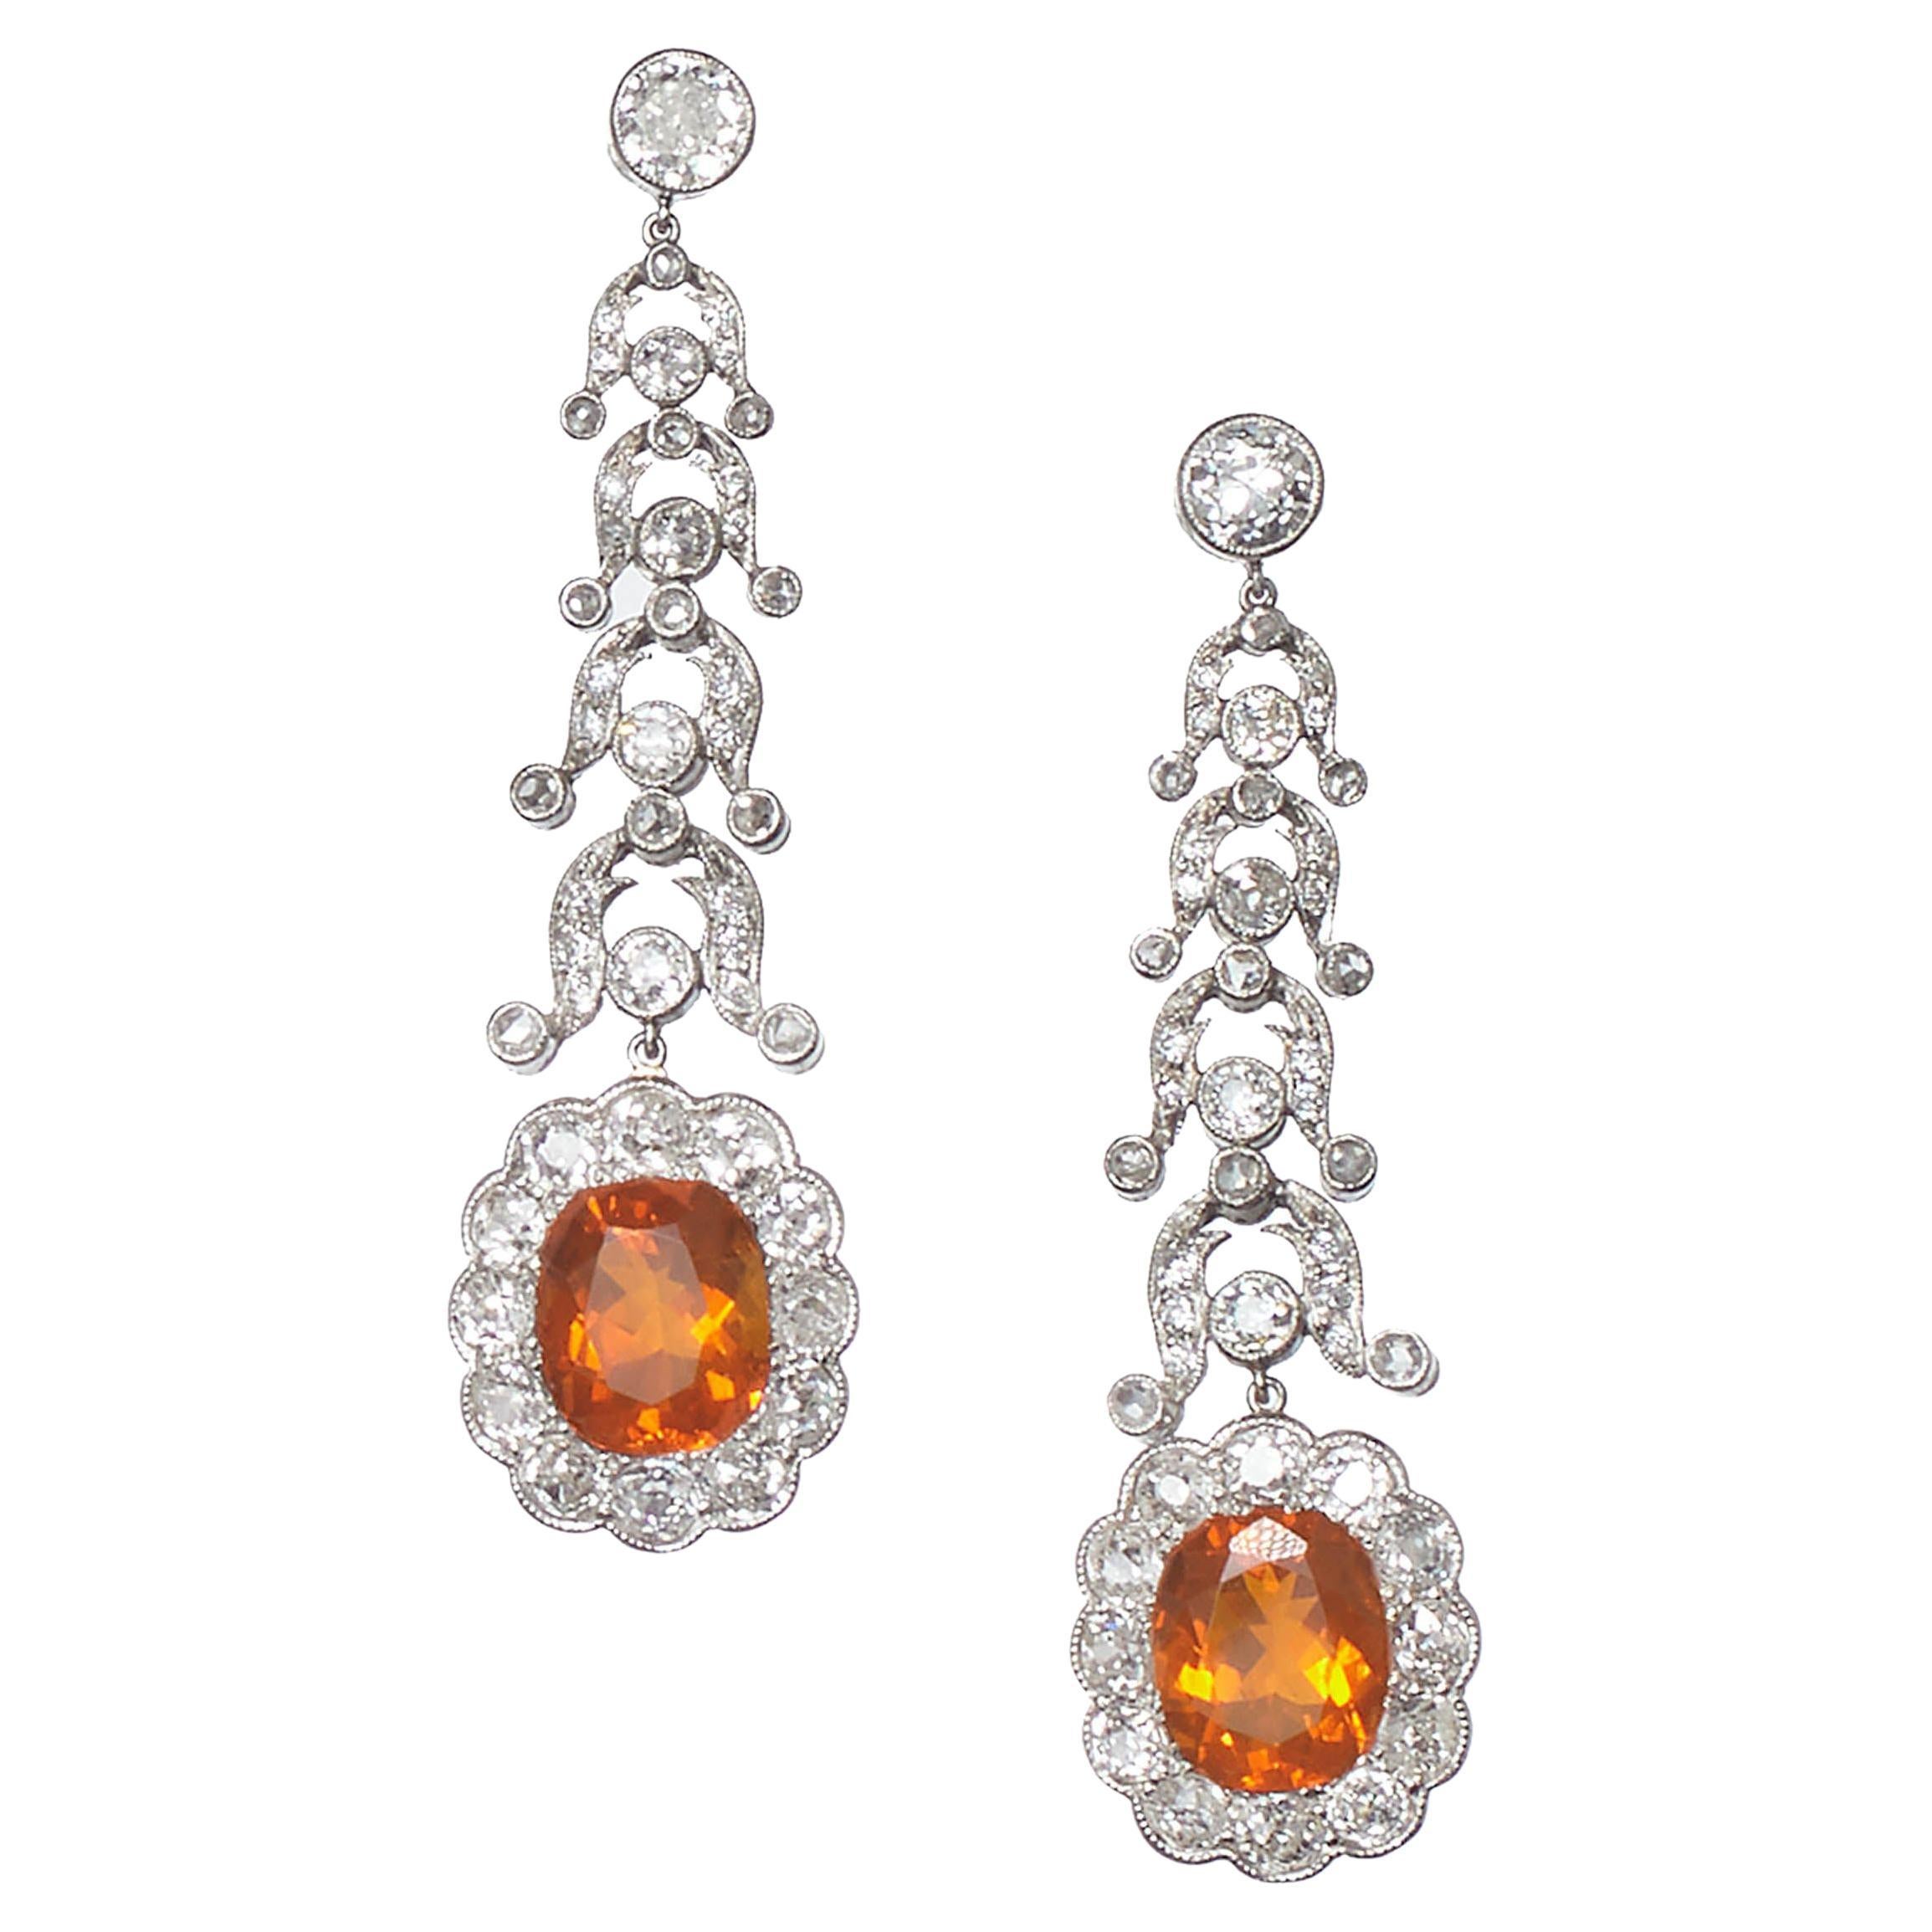 Garrards Fire Opal Diamond and Platinum Drop Earrings and Negligee Pendant Set